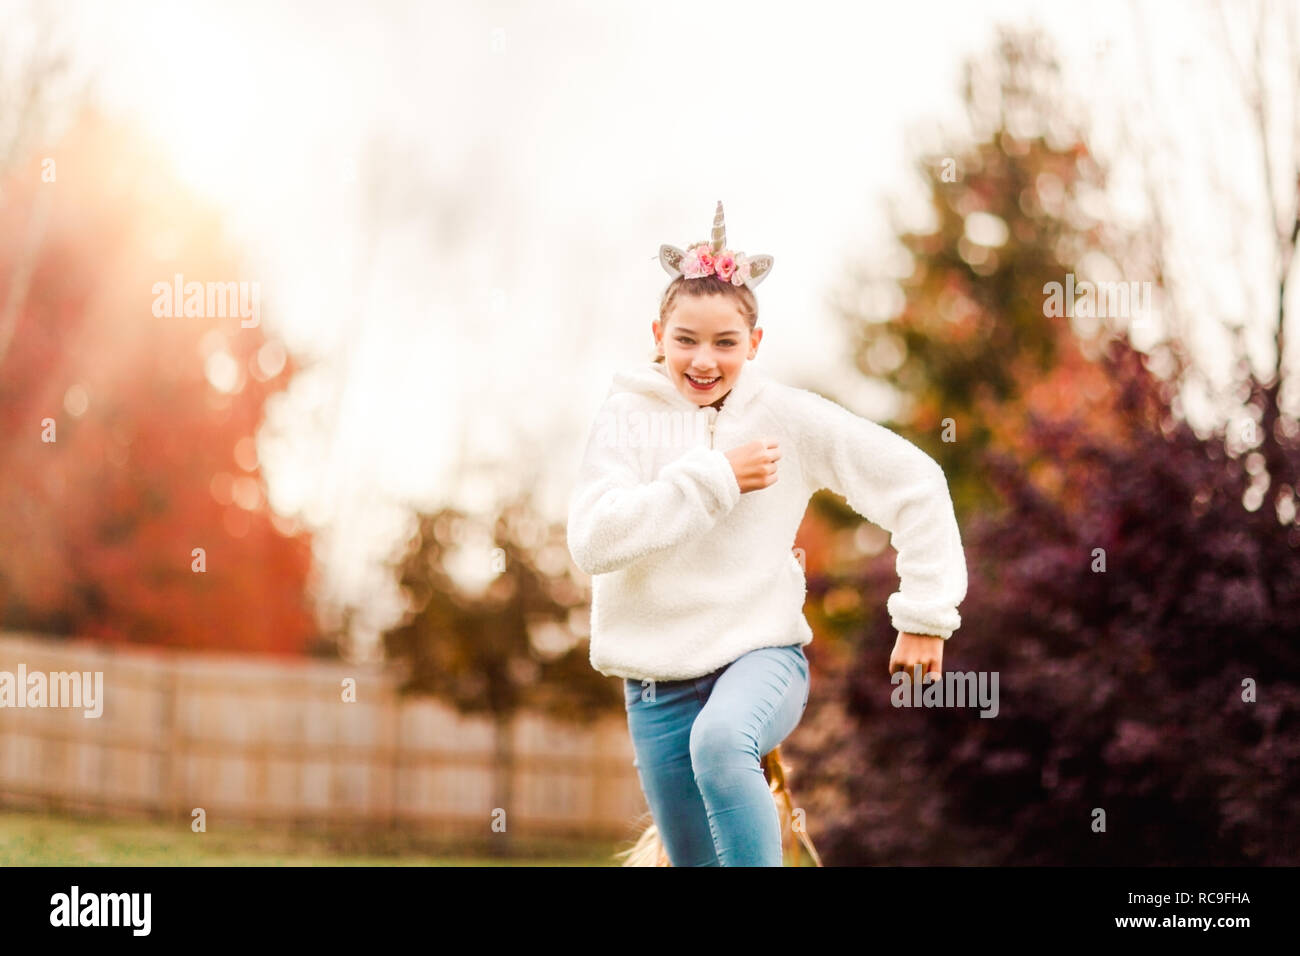 Girl avec unicorn bandeau running in park Banque D'Images